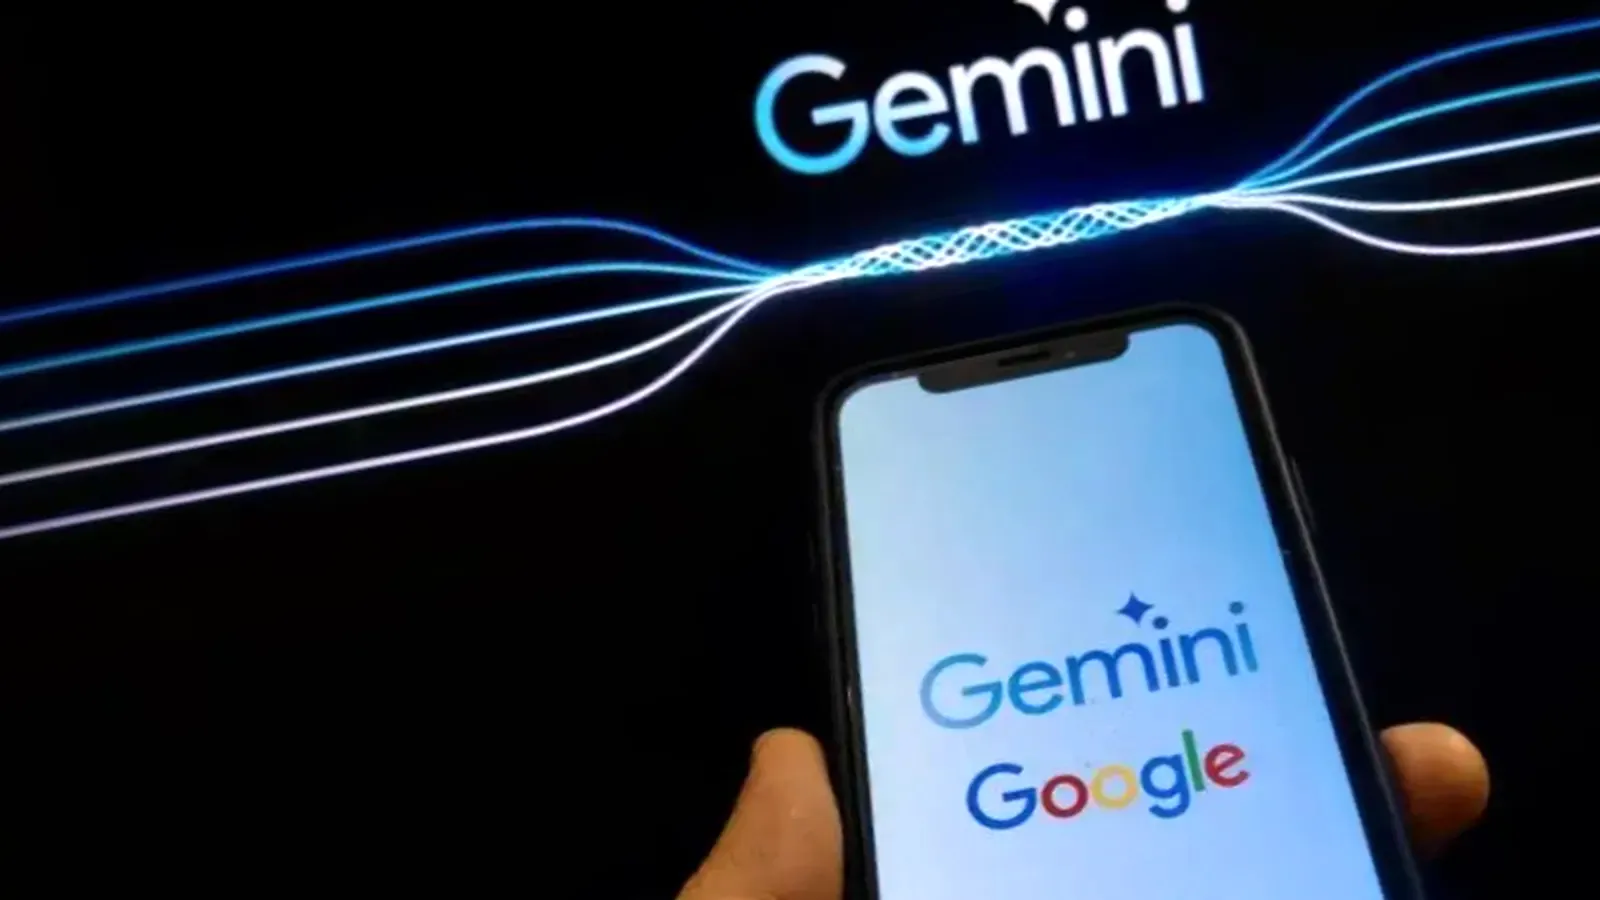 Google Perbaiki AI Gemini yang Bikin Gambar Ngaco - credit: pcmag - pibitek.biz - Manusia